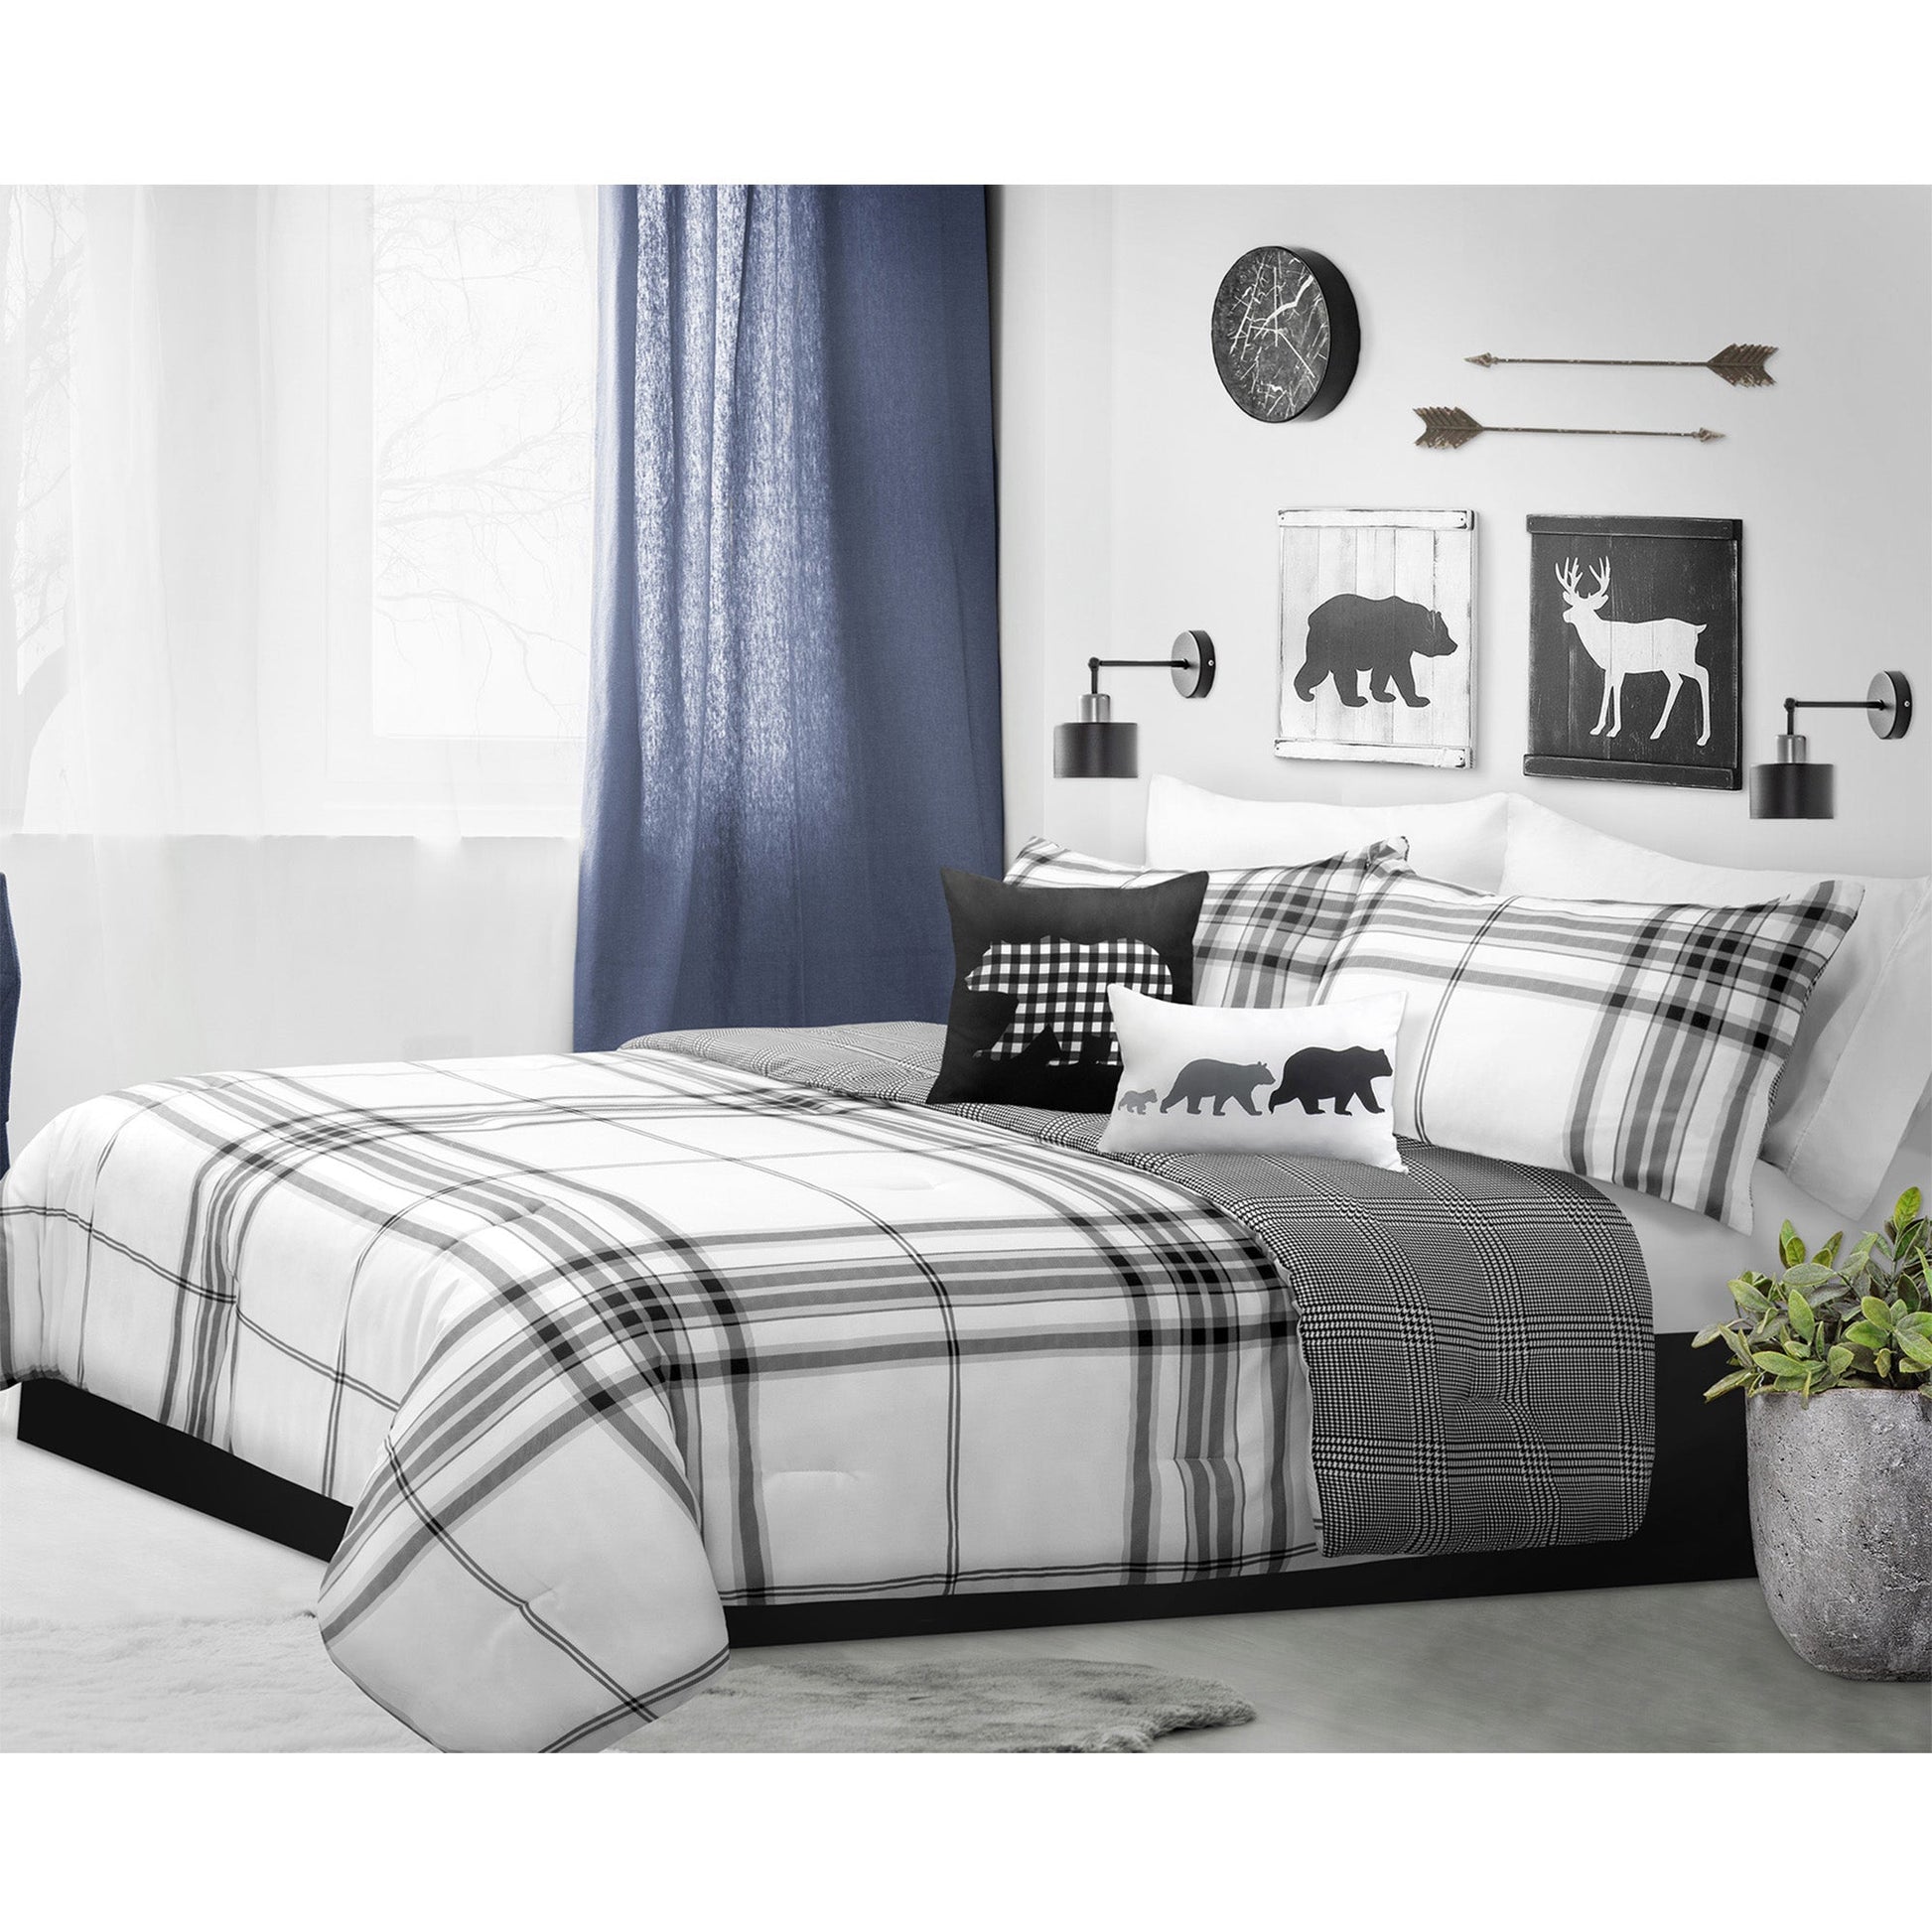 Reversible Printed Comforter Bedding Set King 5 Piece Bear Plaid Rustic Cabin - DecoElegance - Bedding Comforter Set